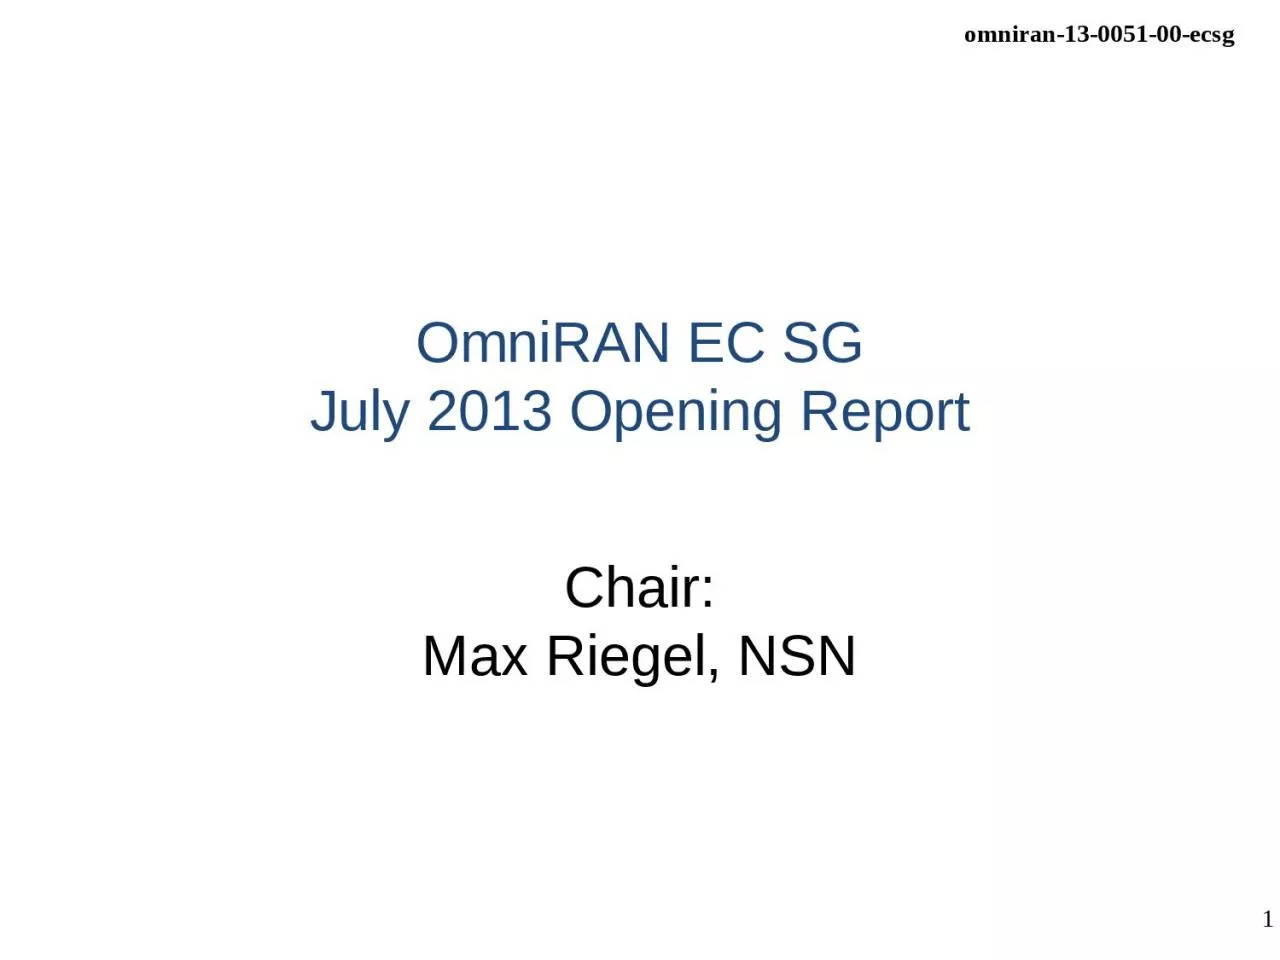 OmniRAN EC SG July 2013 Opening Report